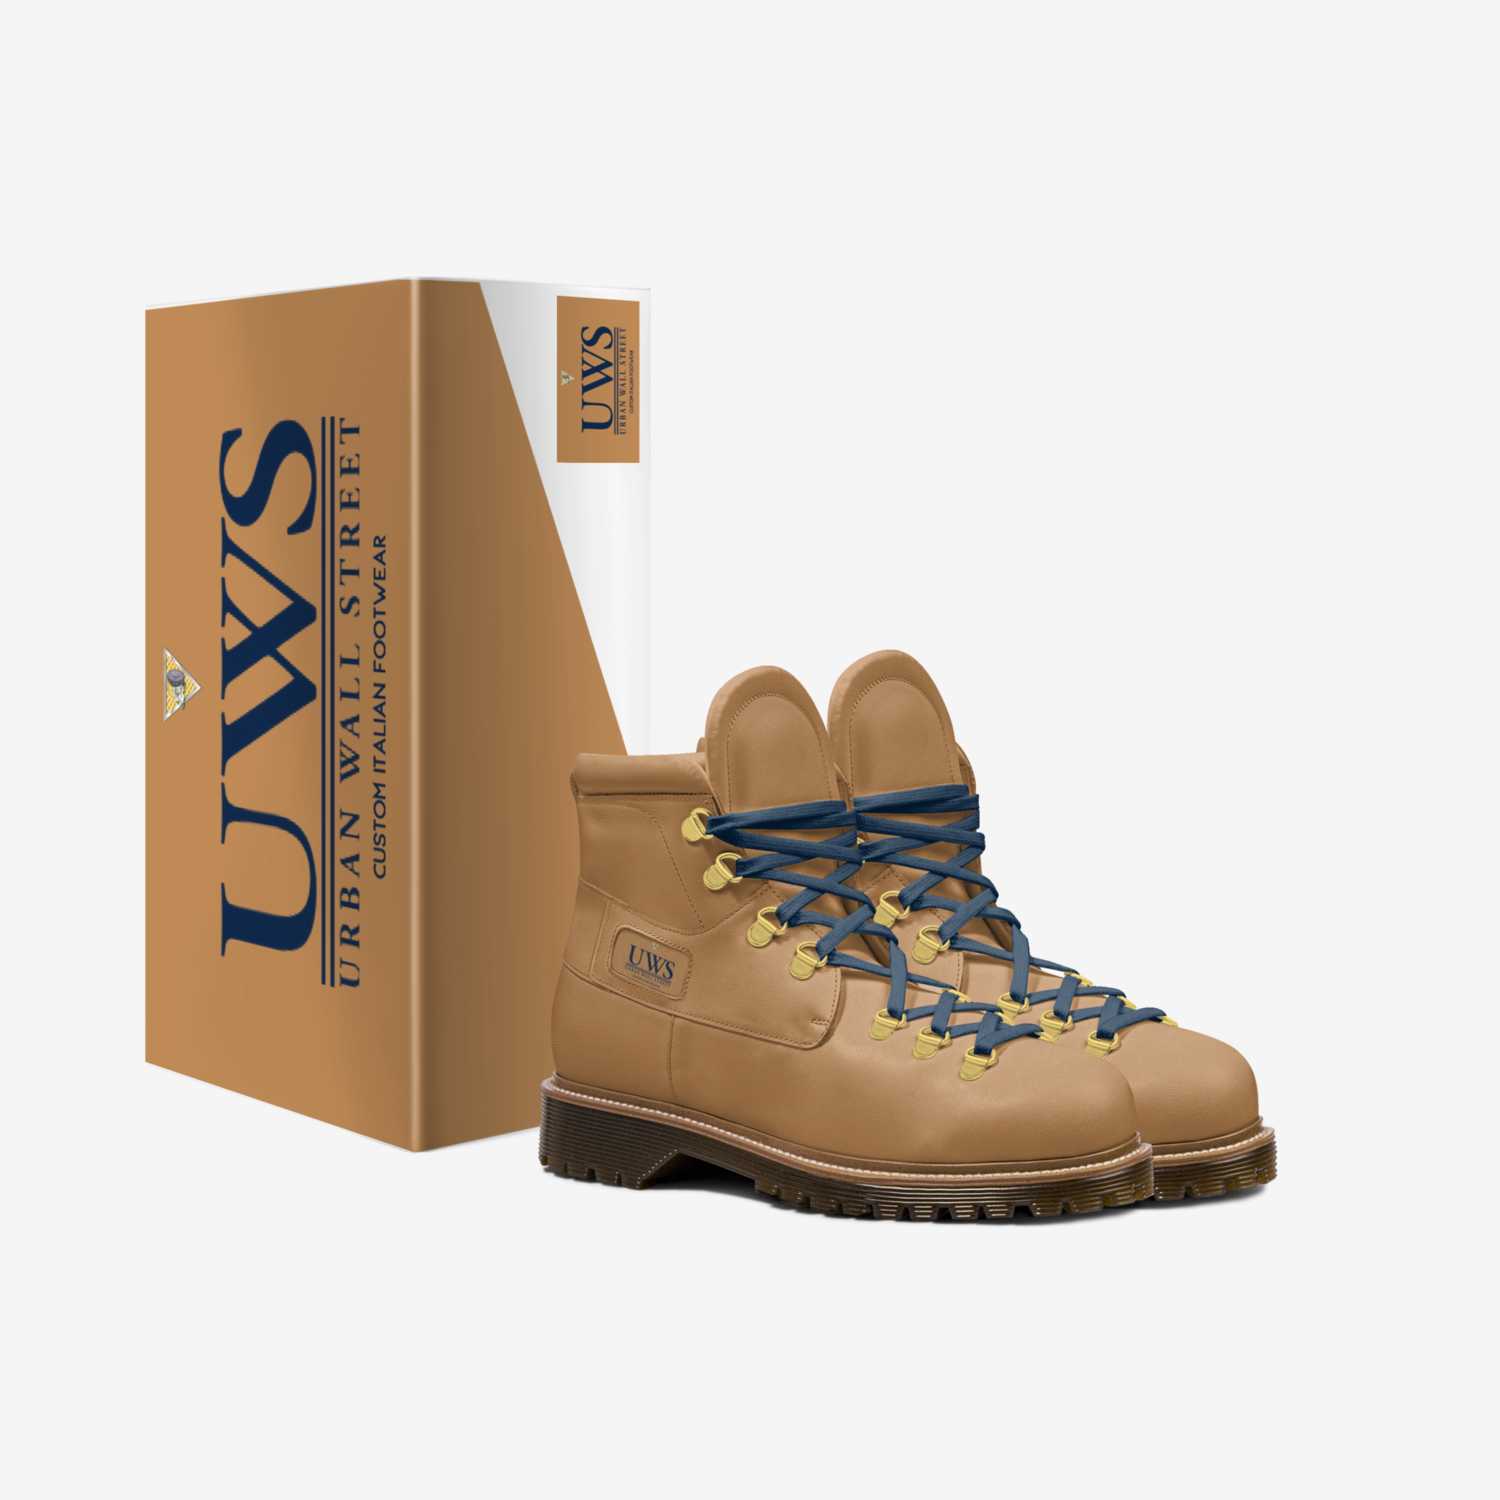 Flatlandz custom made in Italy shoes by Urbanwallstreet Earl | Box view